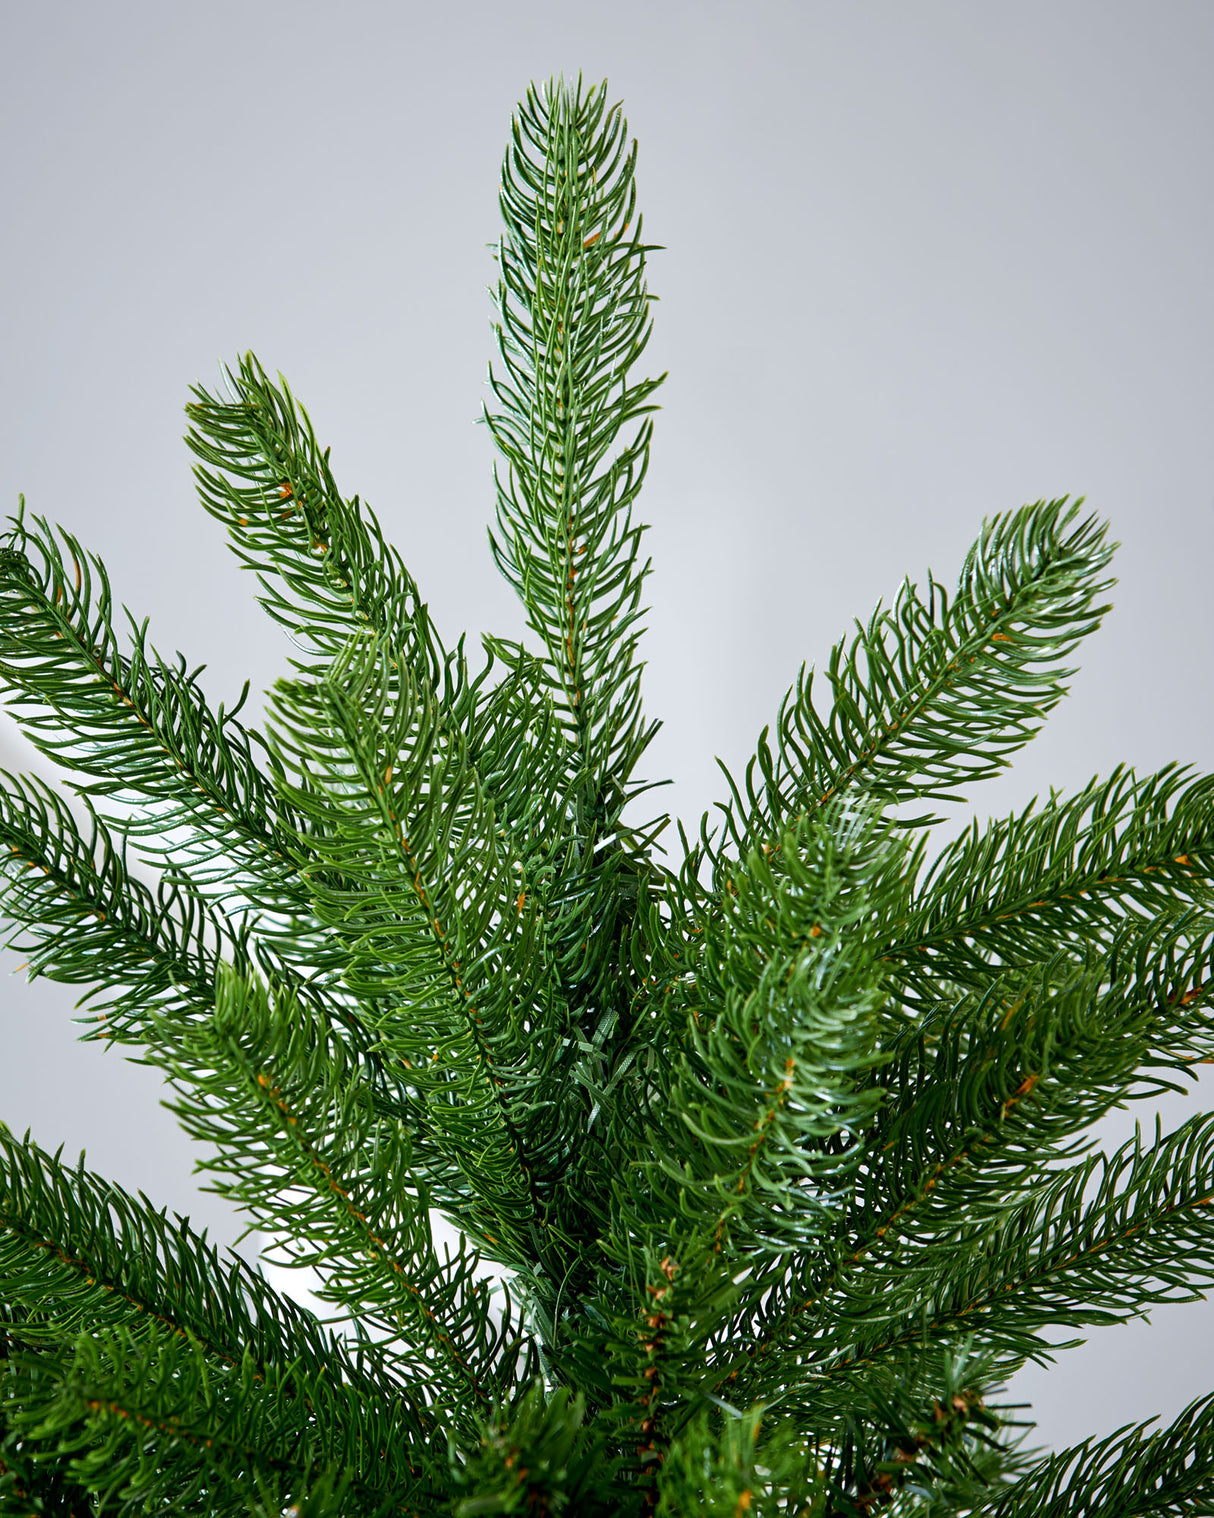 Large Mixed Pine Christmas Tree